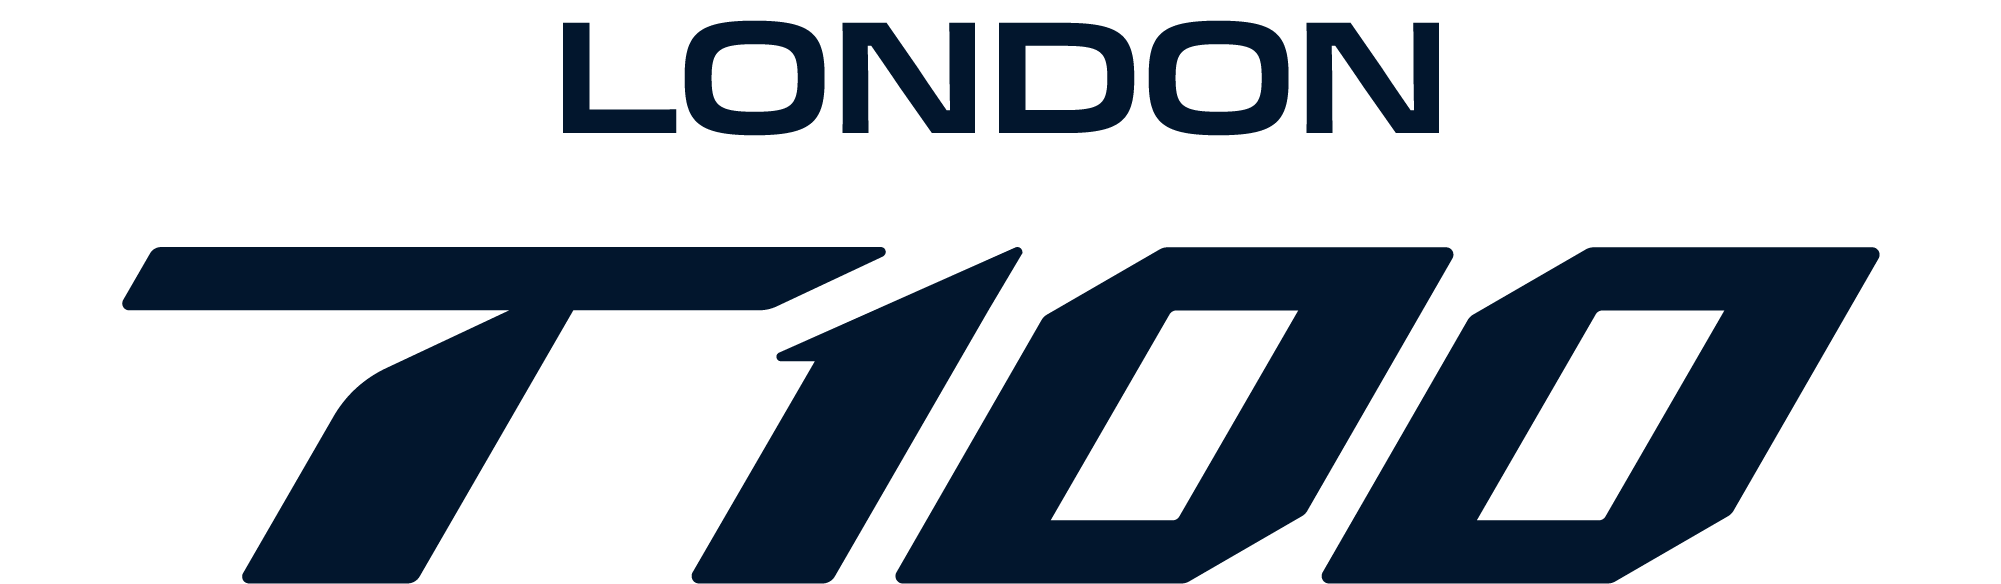 London T100 - Super Sprint